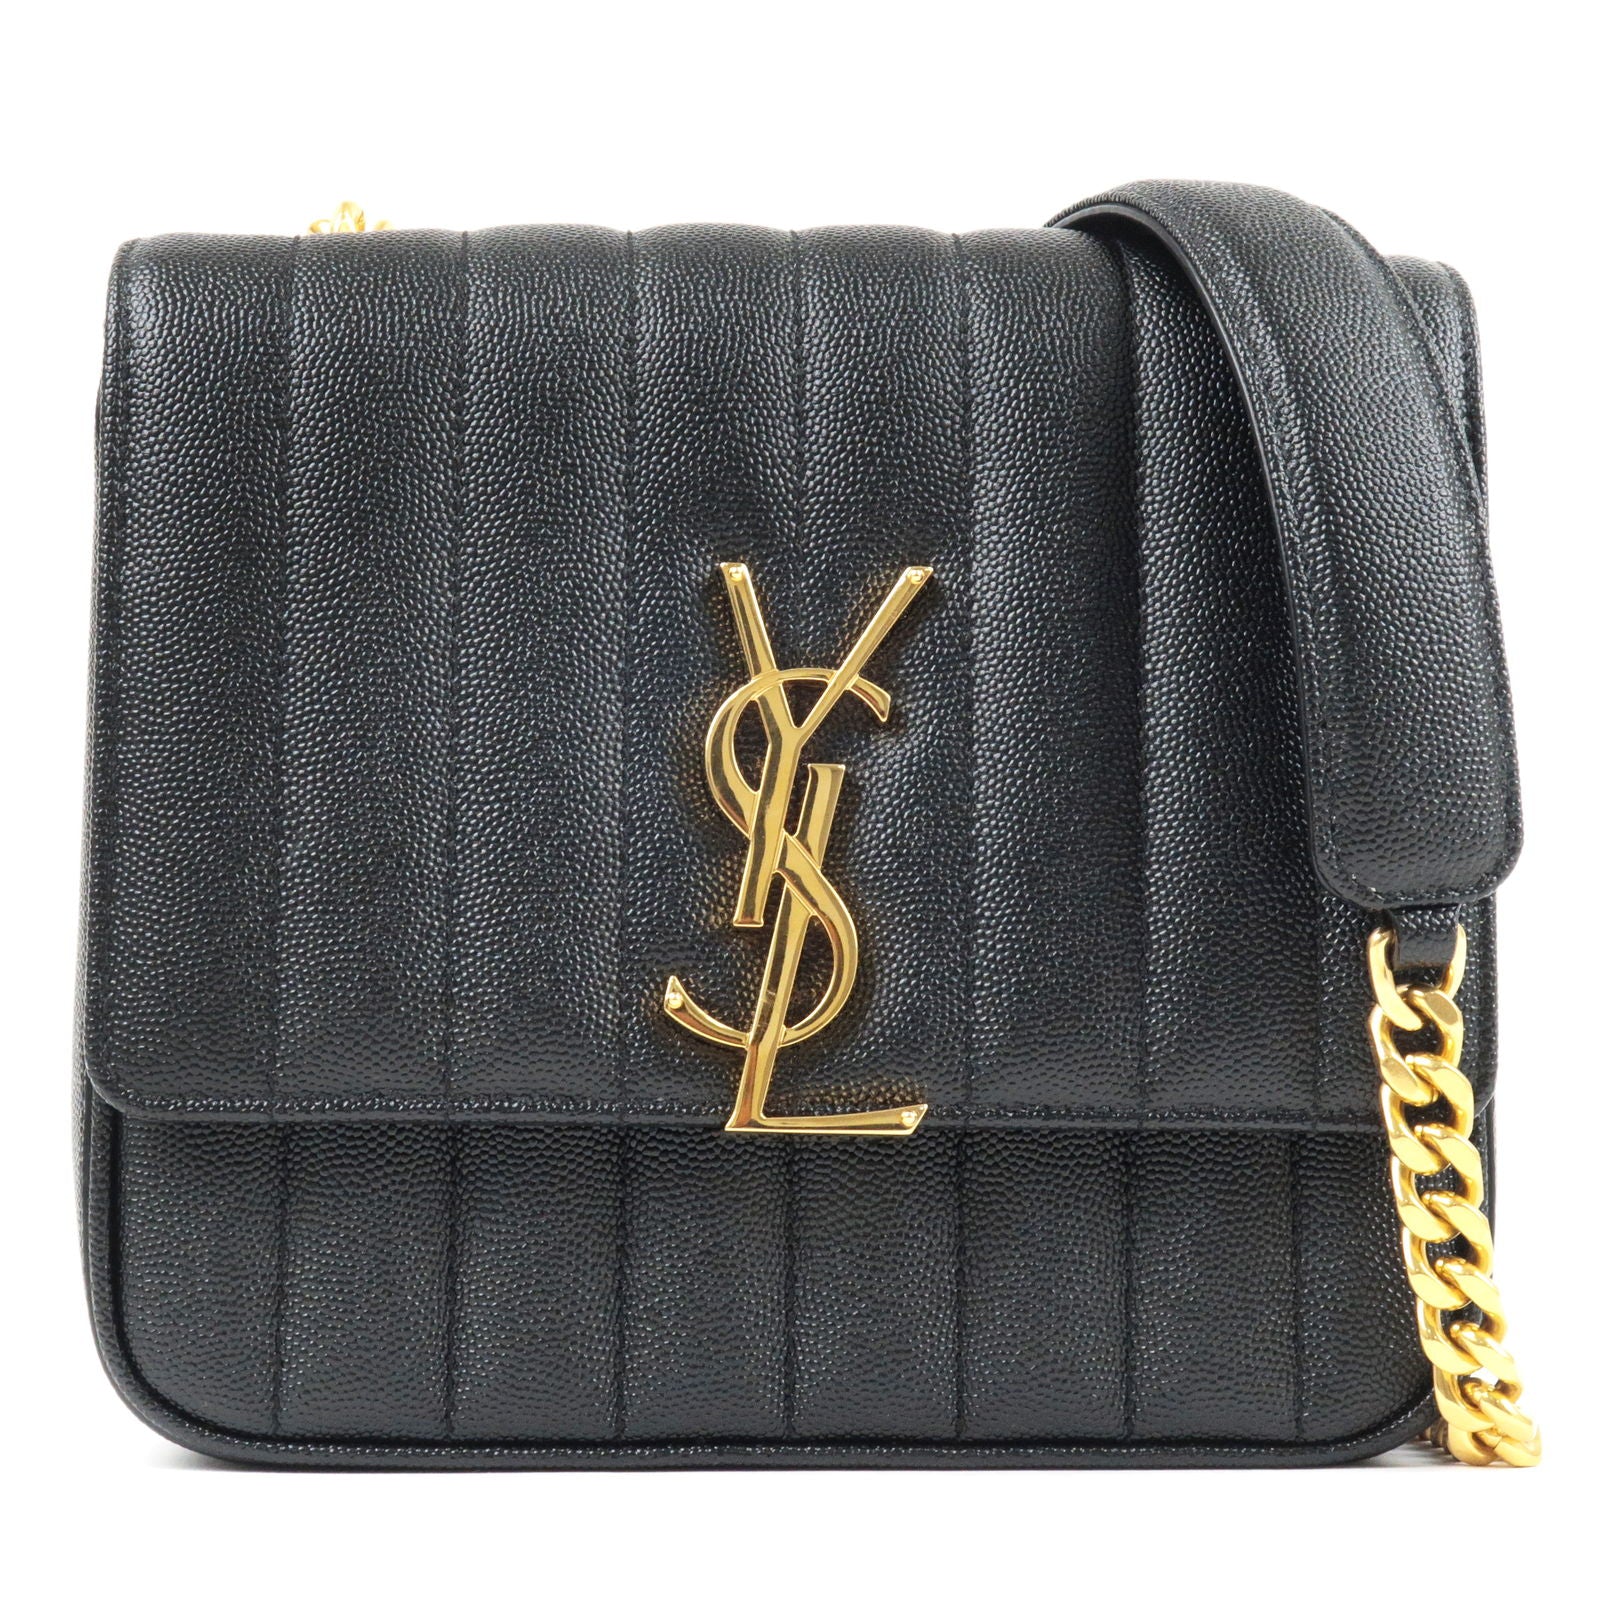 Saint-Laurent-Vicky-Leather-Chain-Shoulder-Bag-Black-532612